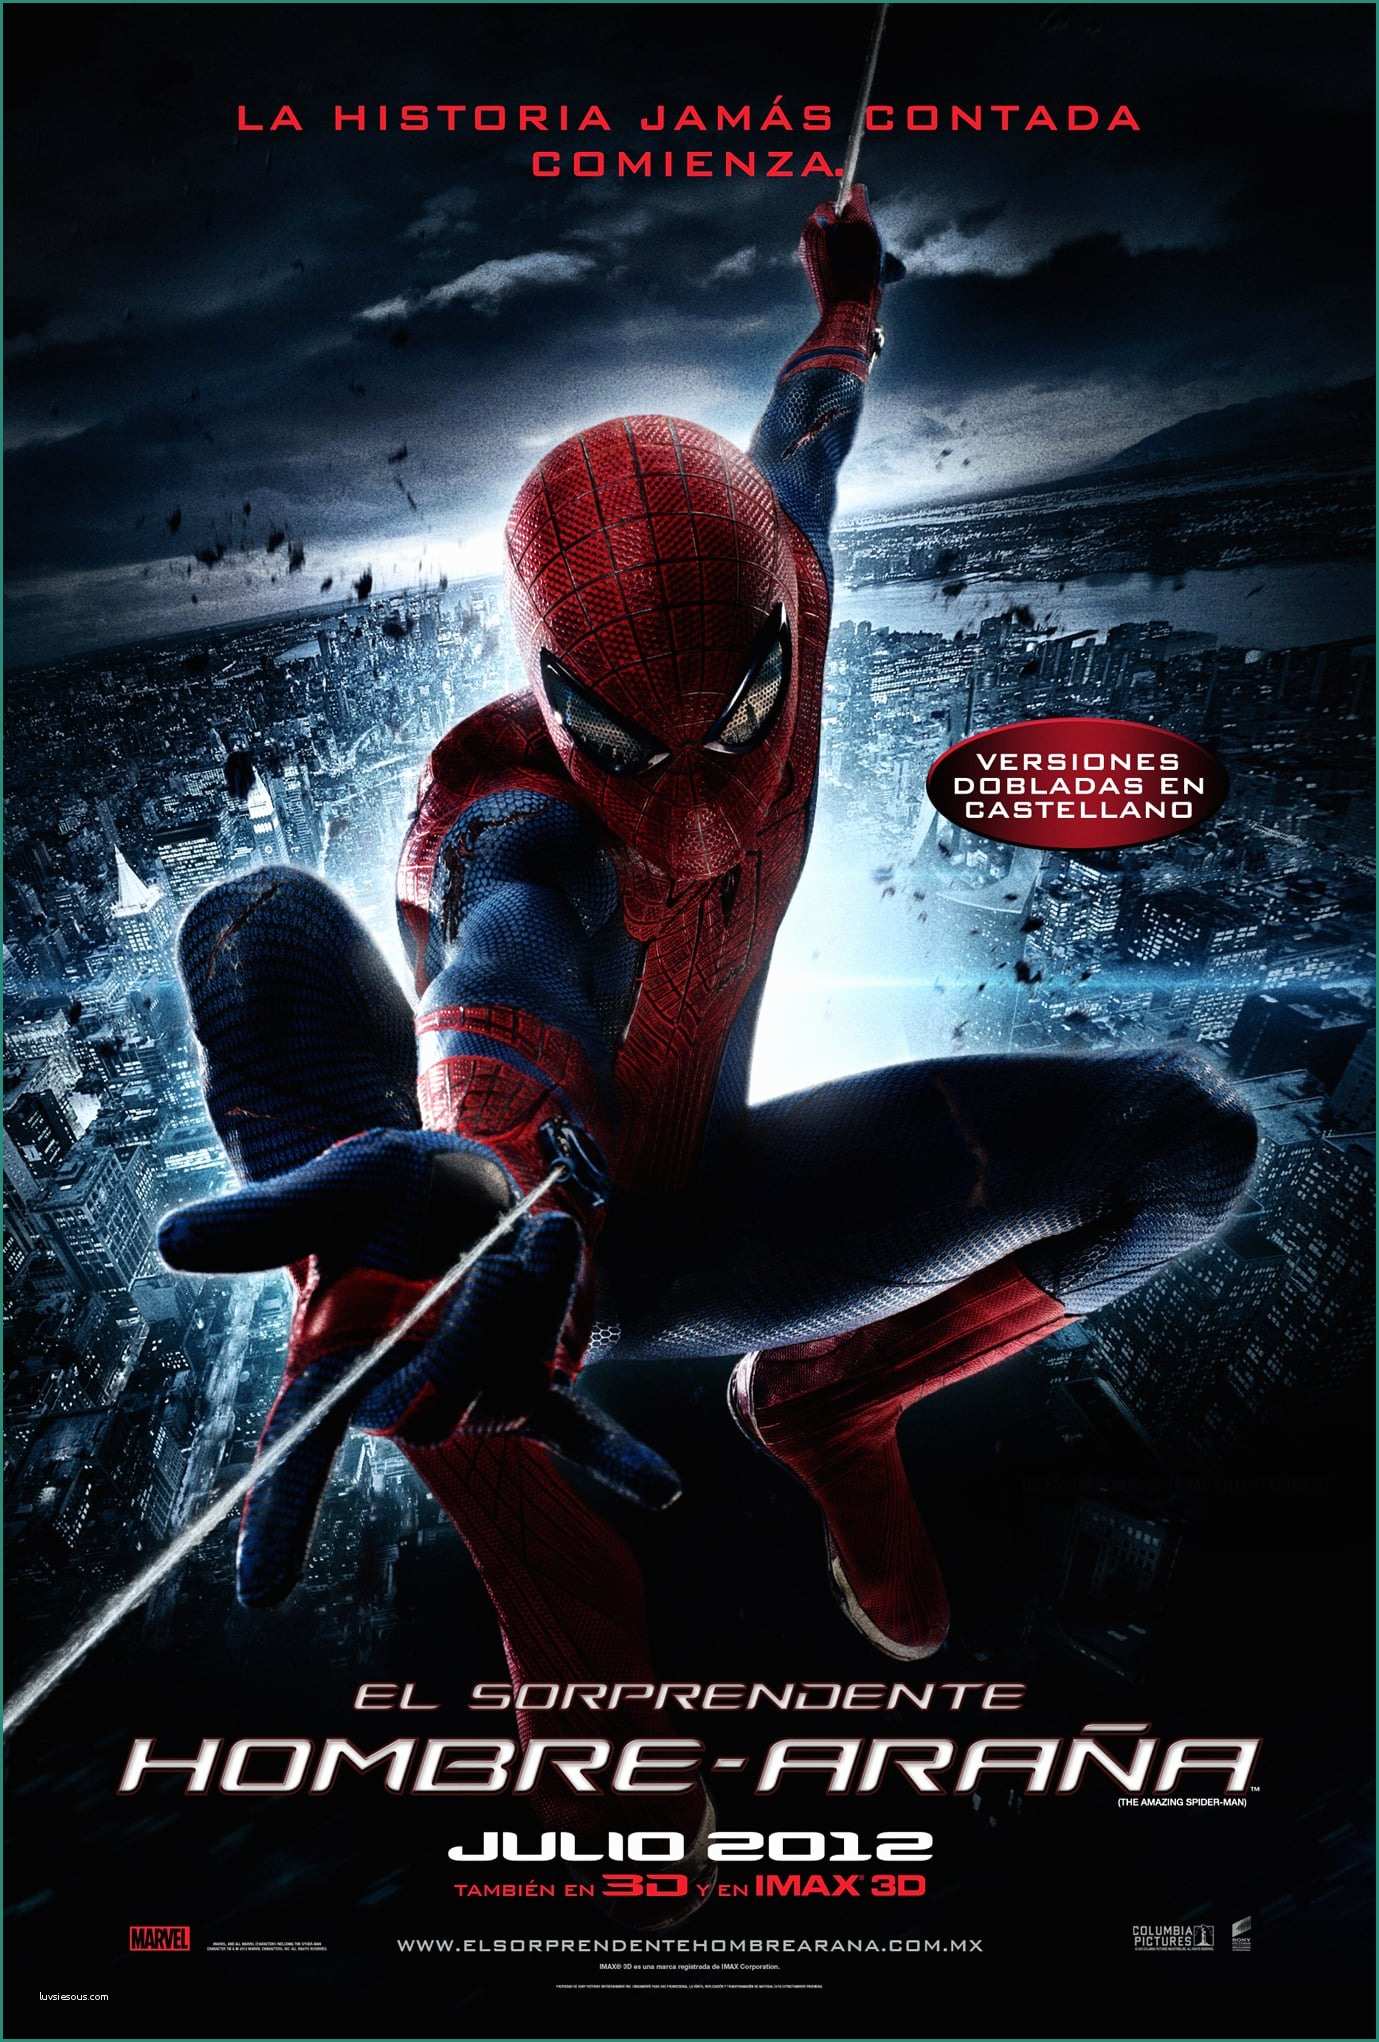 Spiderman Amazing Streaming E the Amazing Spider Man Streaming Megavideo Wroc Awski